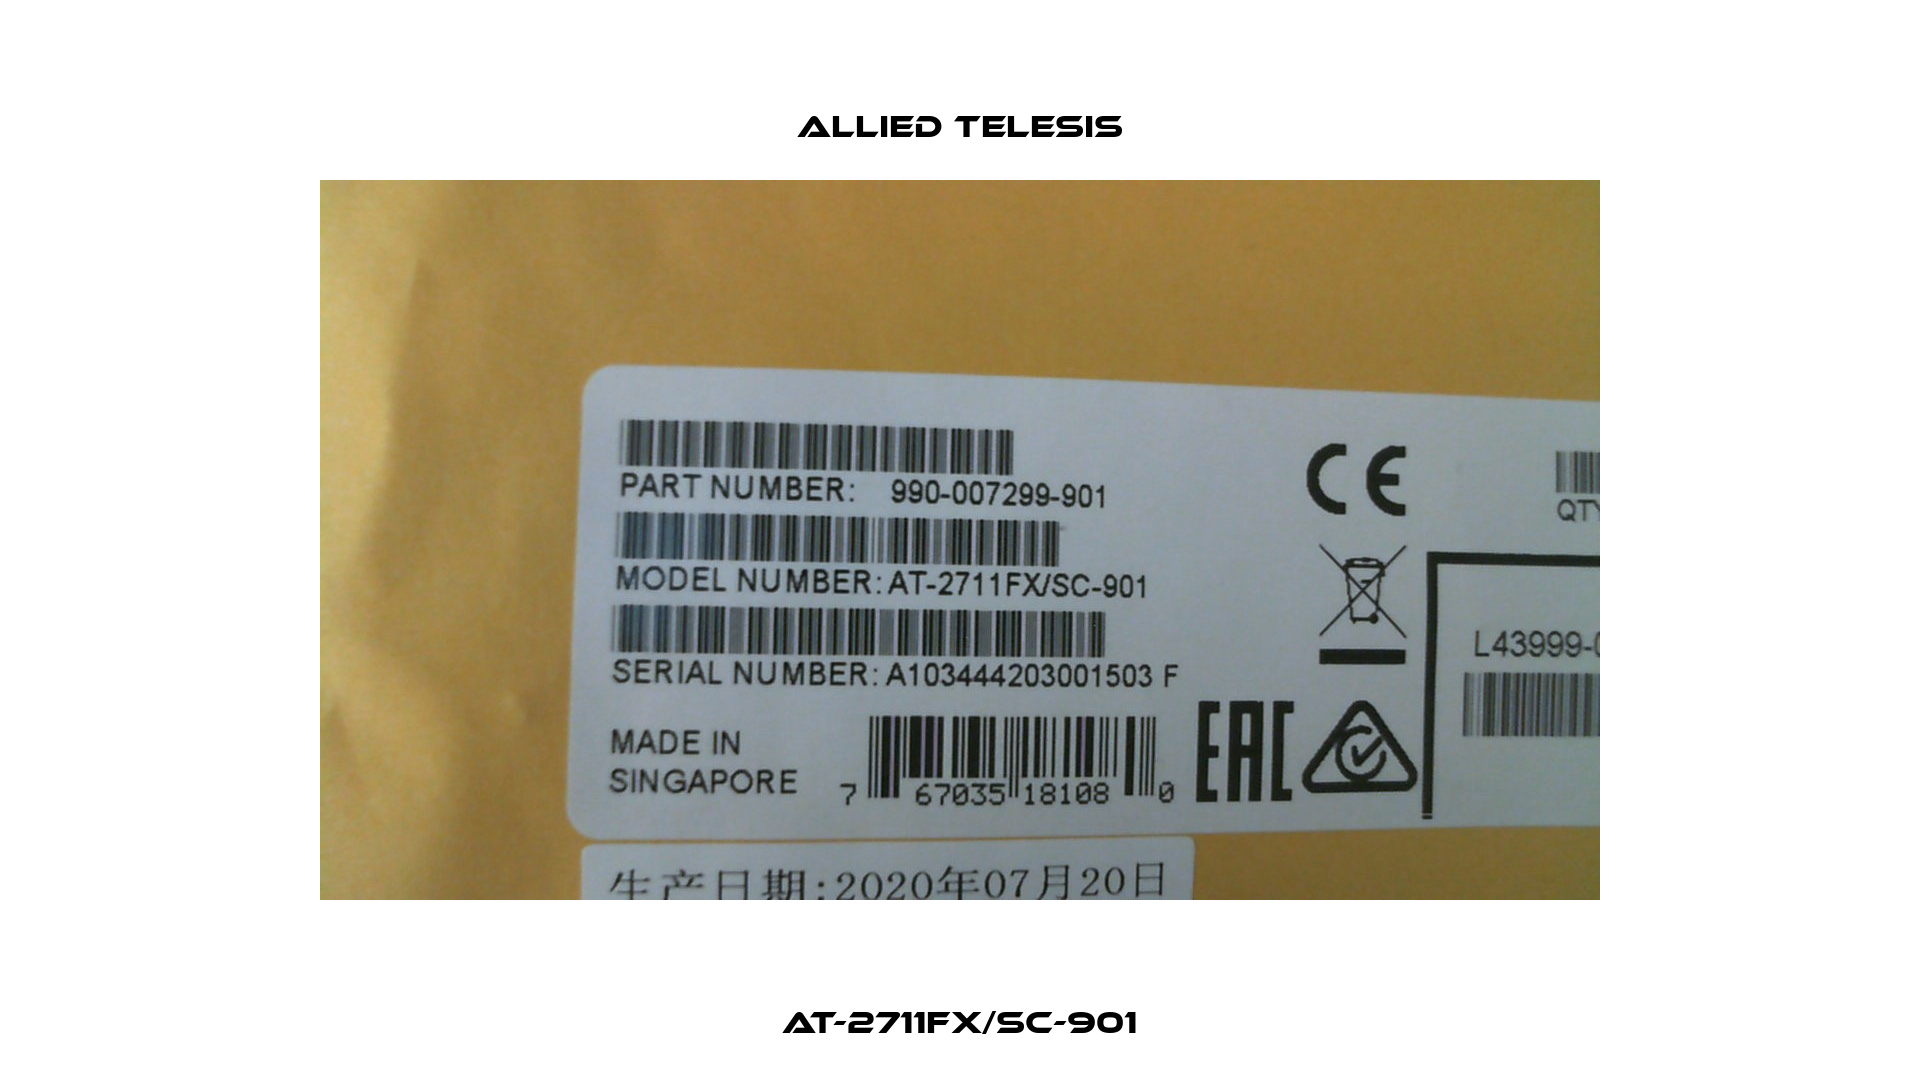 AT-2711FX/SC-901 Allied Telesis